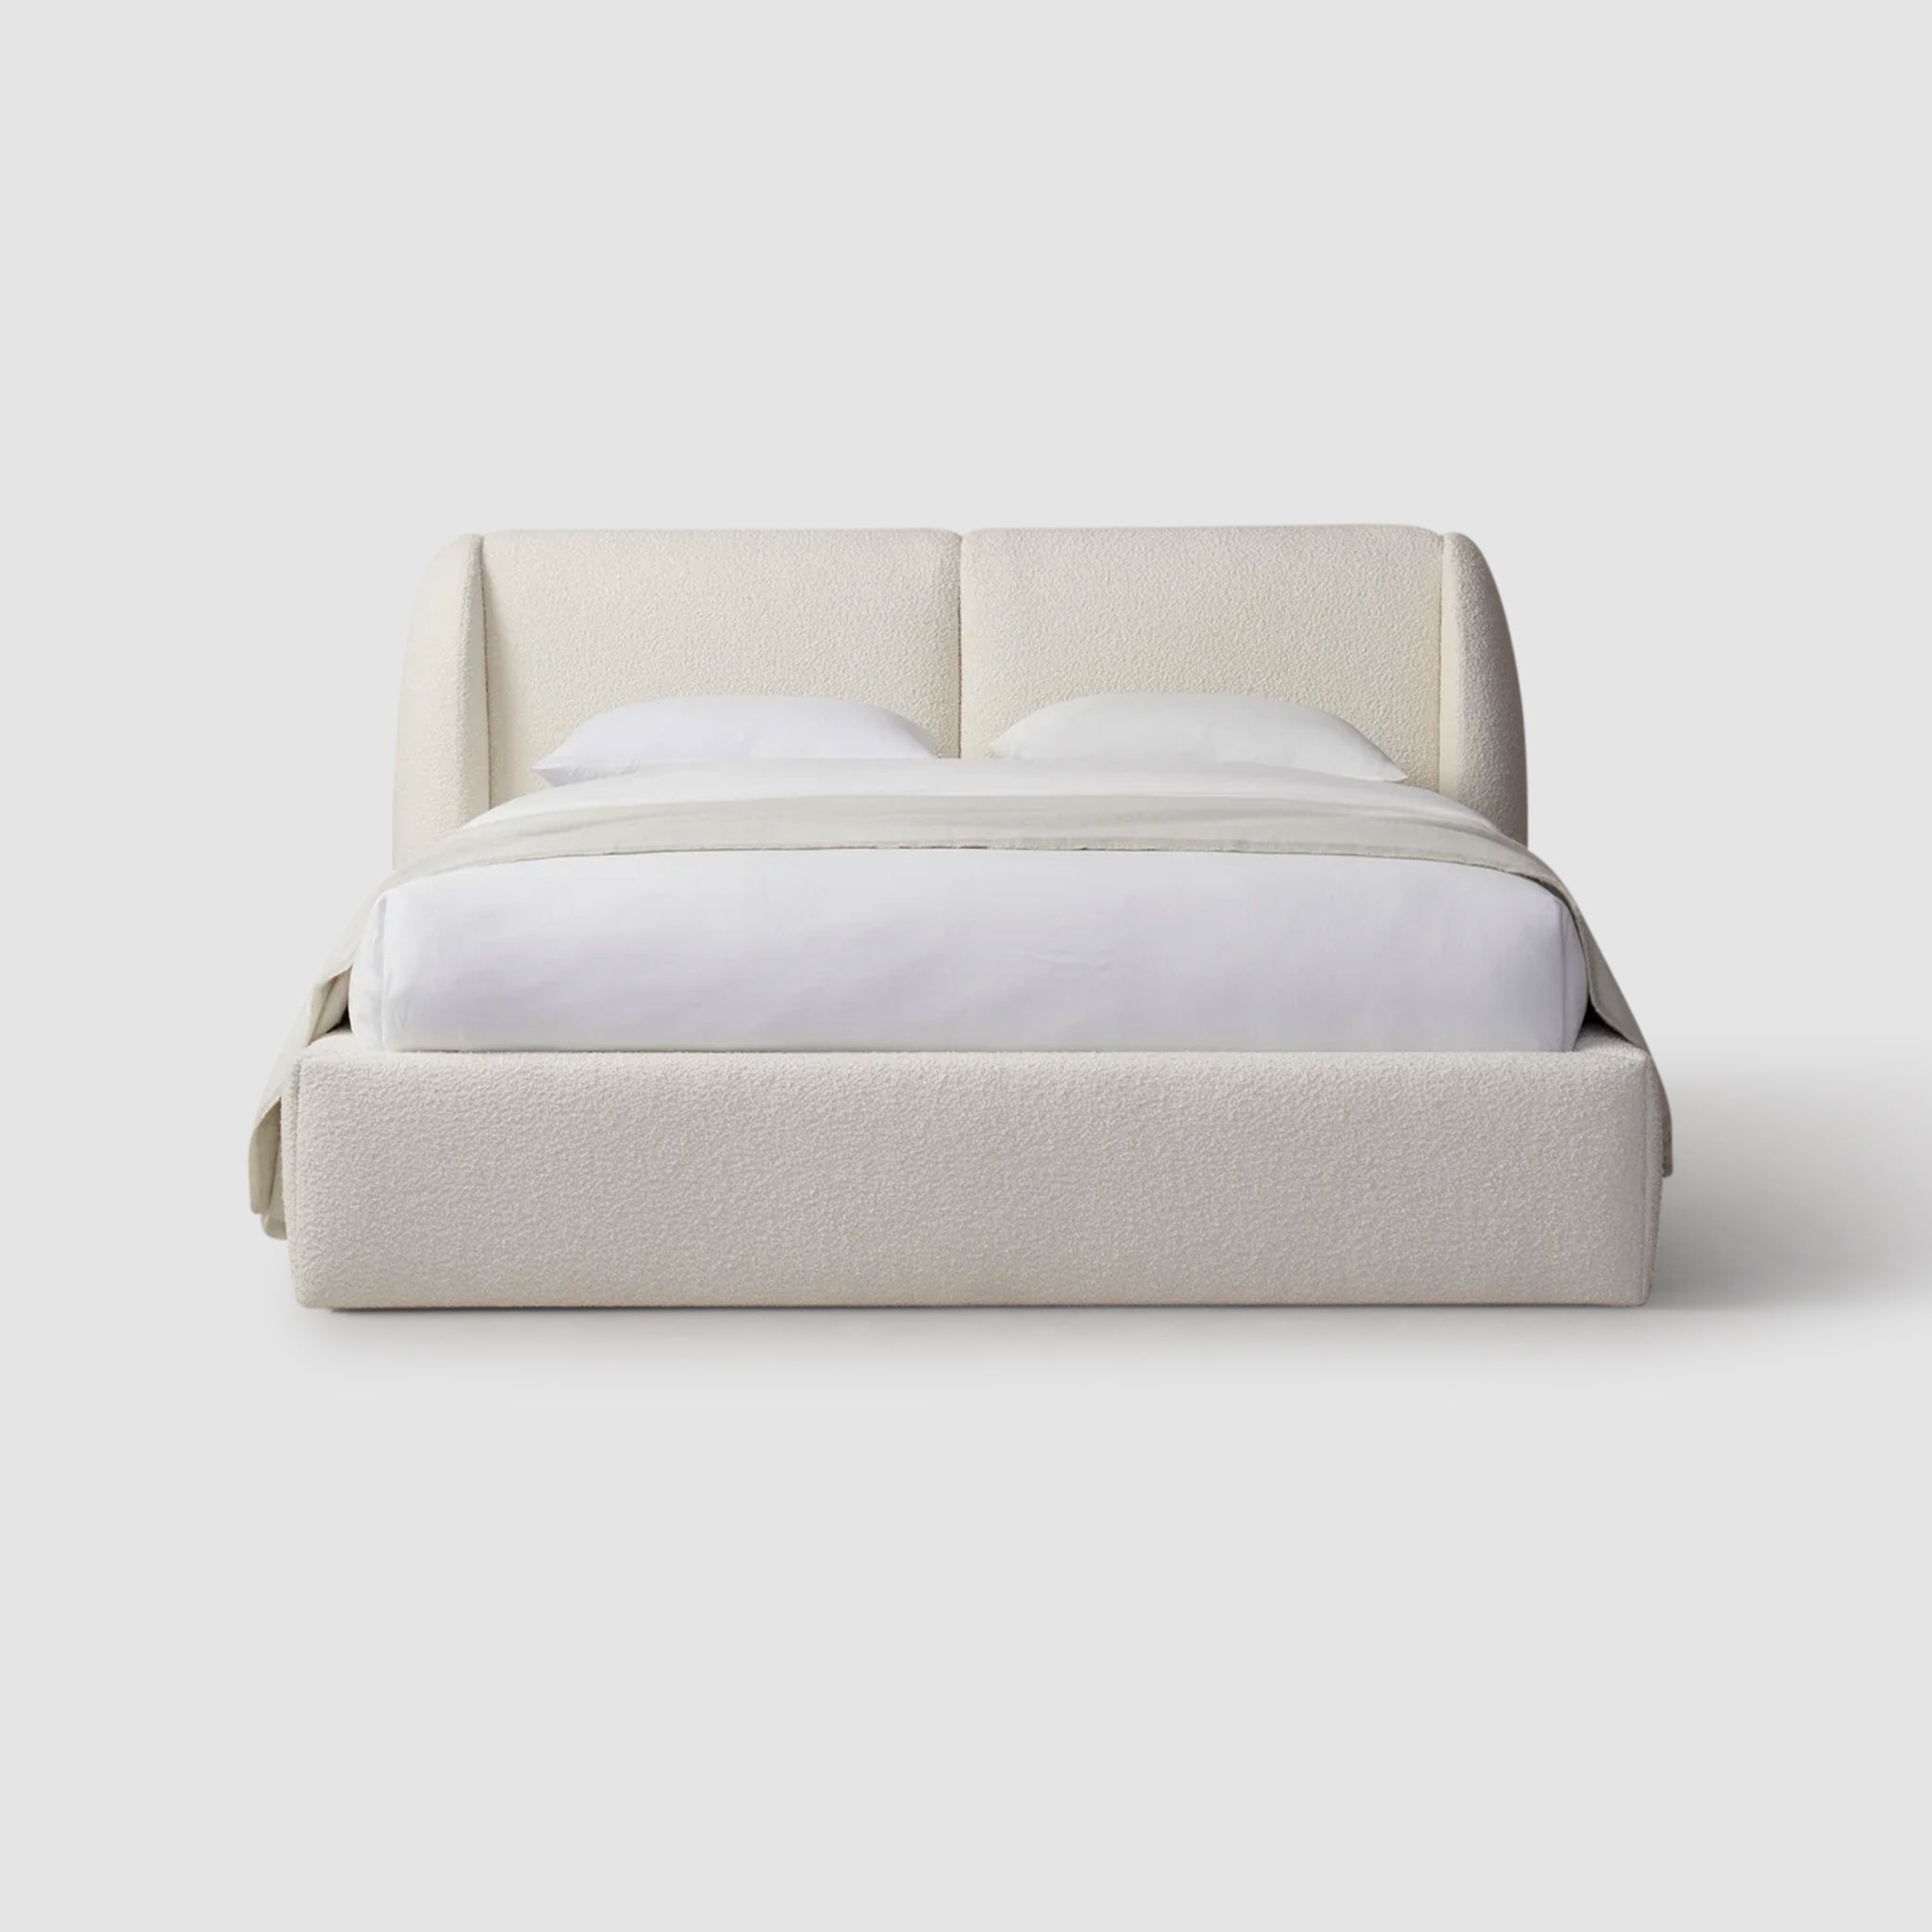 White platform bed with crisp white bedding on a white backdrop